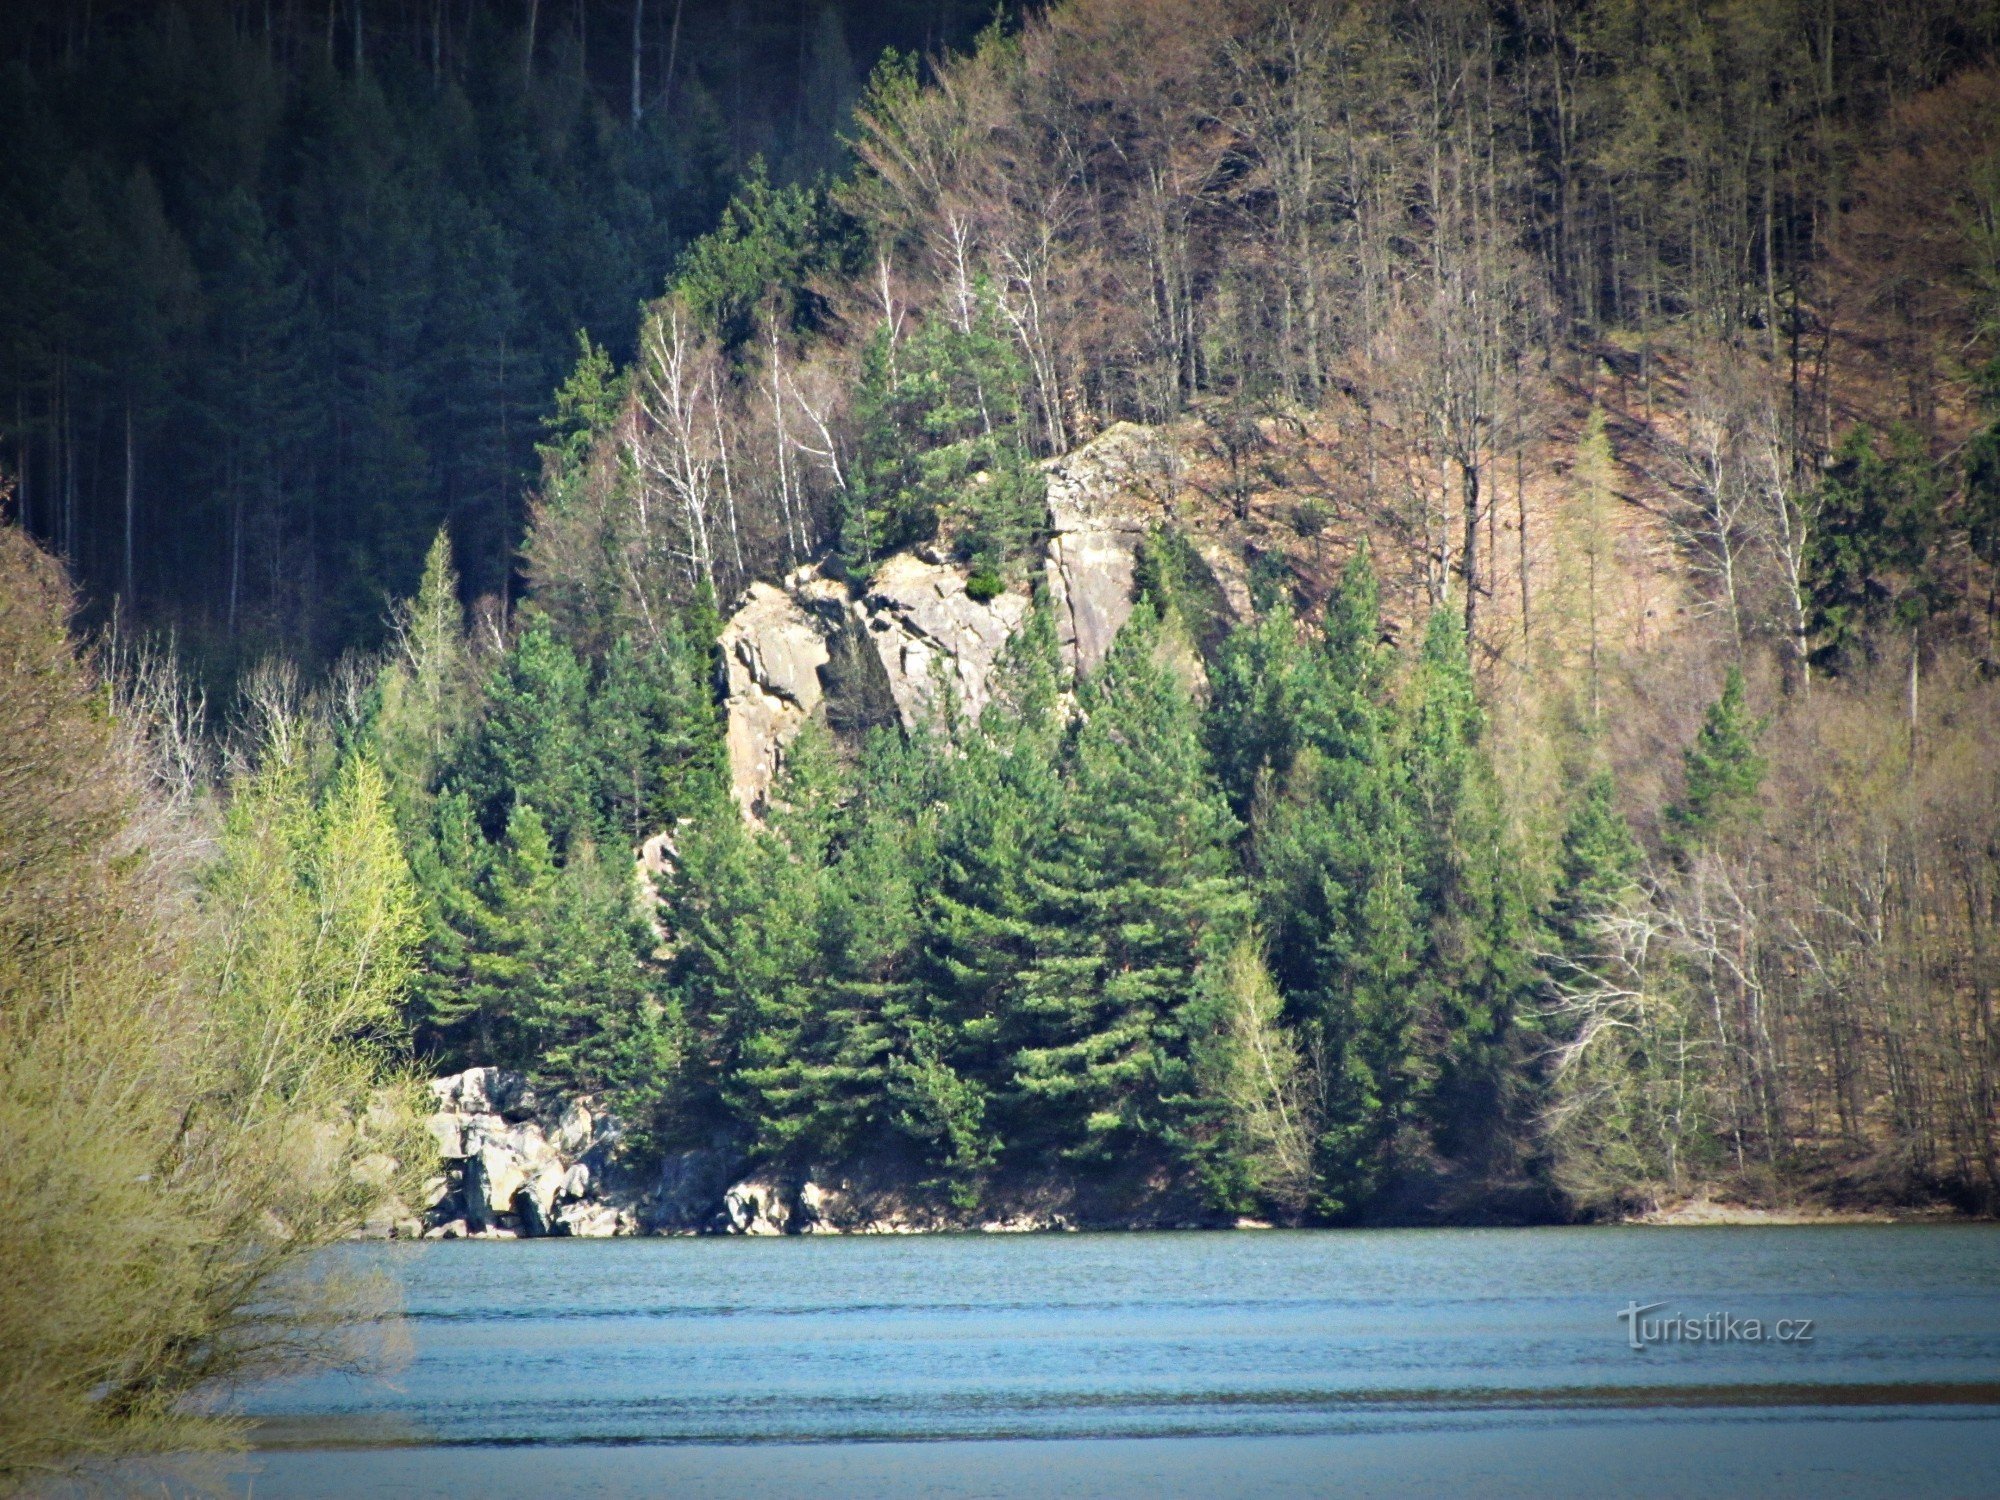 Slušovice 附近的 Janůvka 岩石